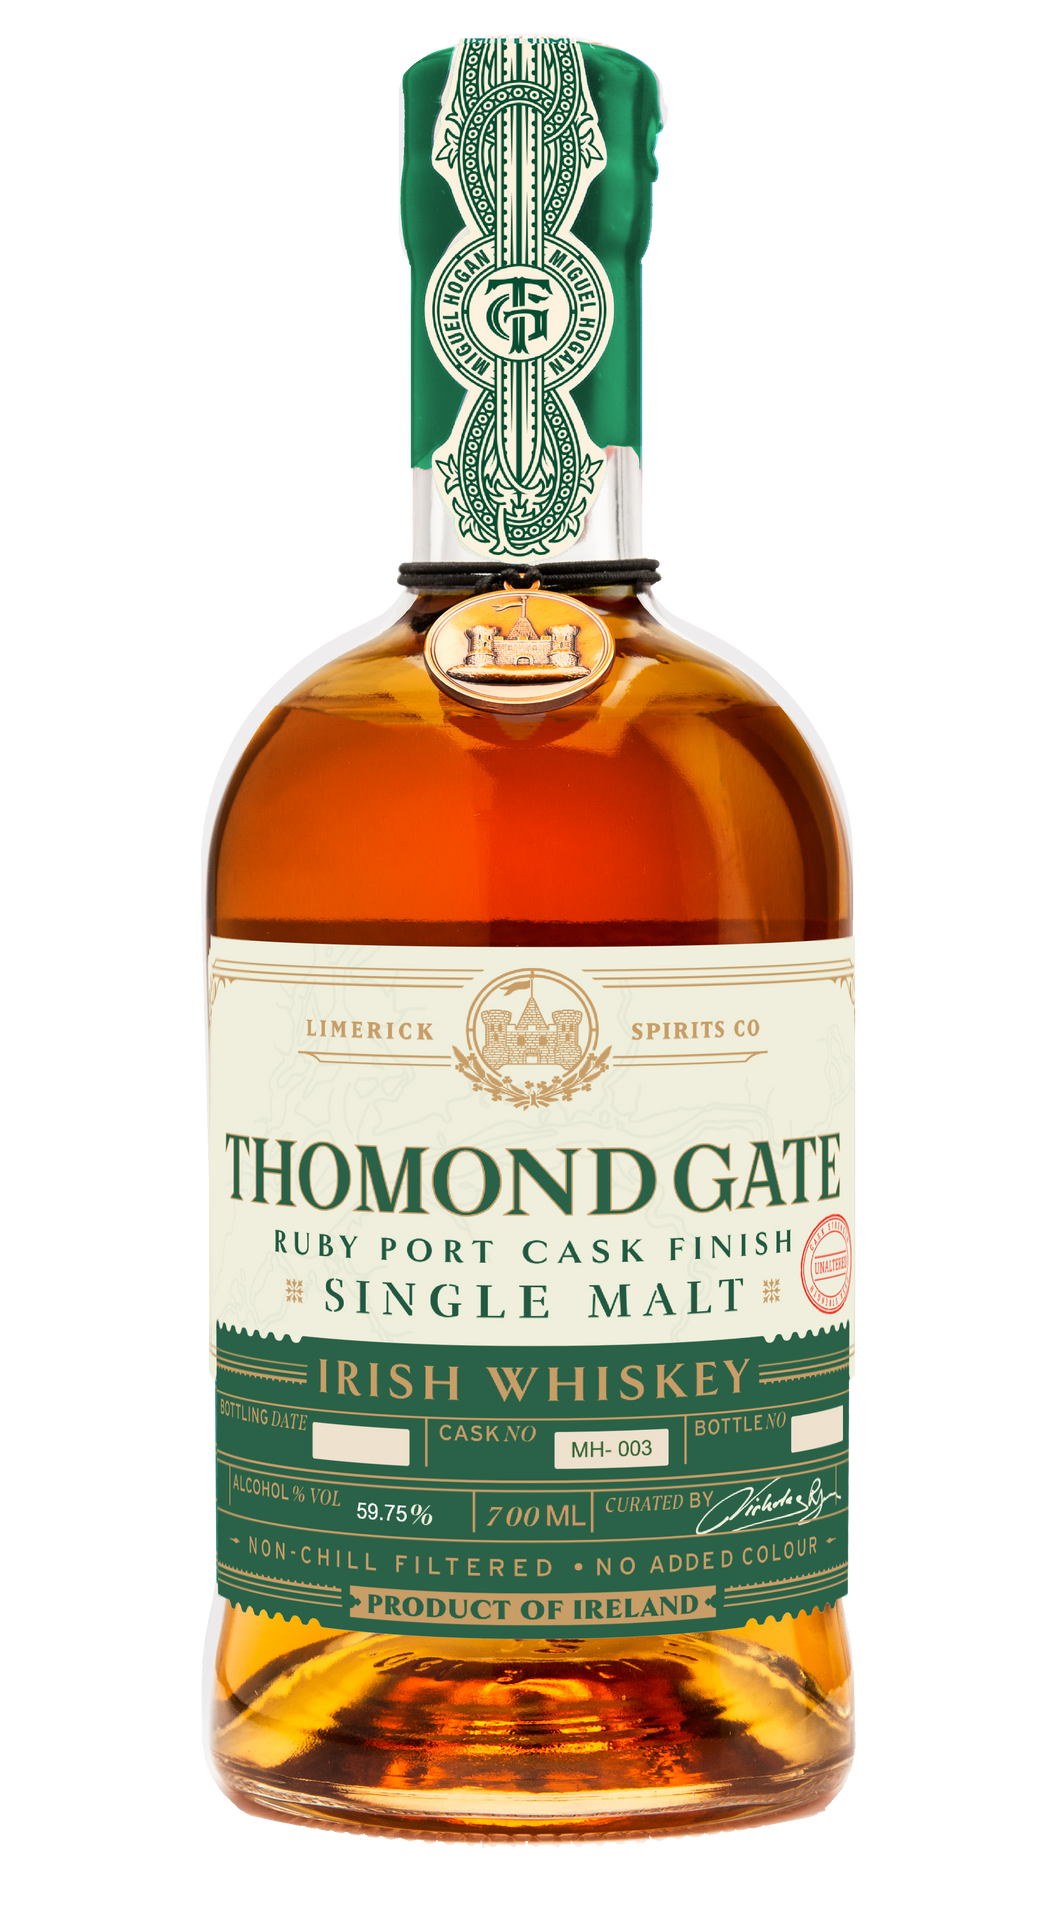 Thomond Gate Ruby Port Cask Finish Single Malt Irish Whisky 700ml